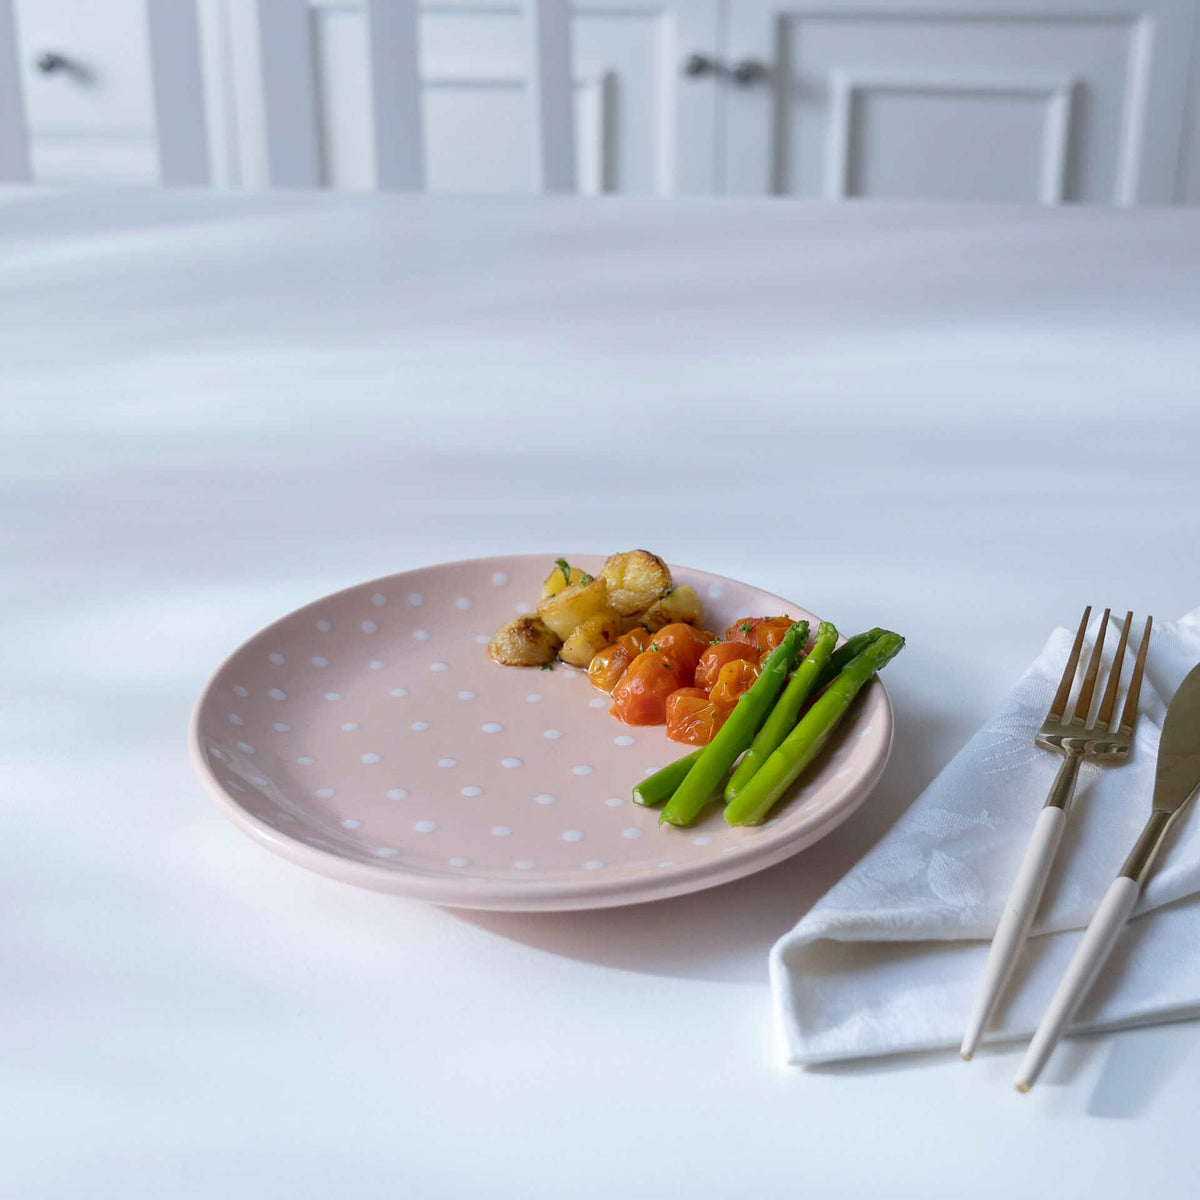 ceramic breakfast plate polka dots blush - ellementry